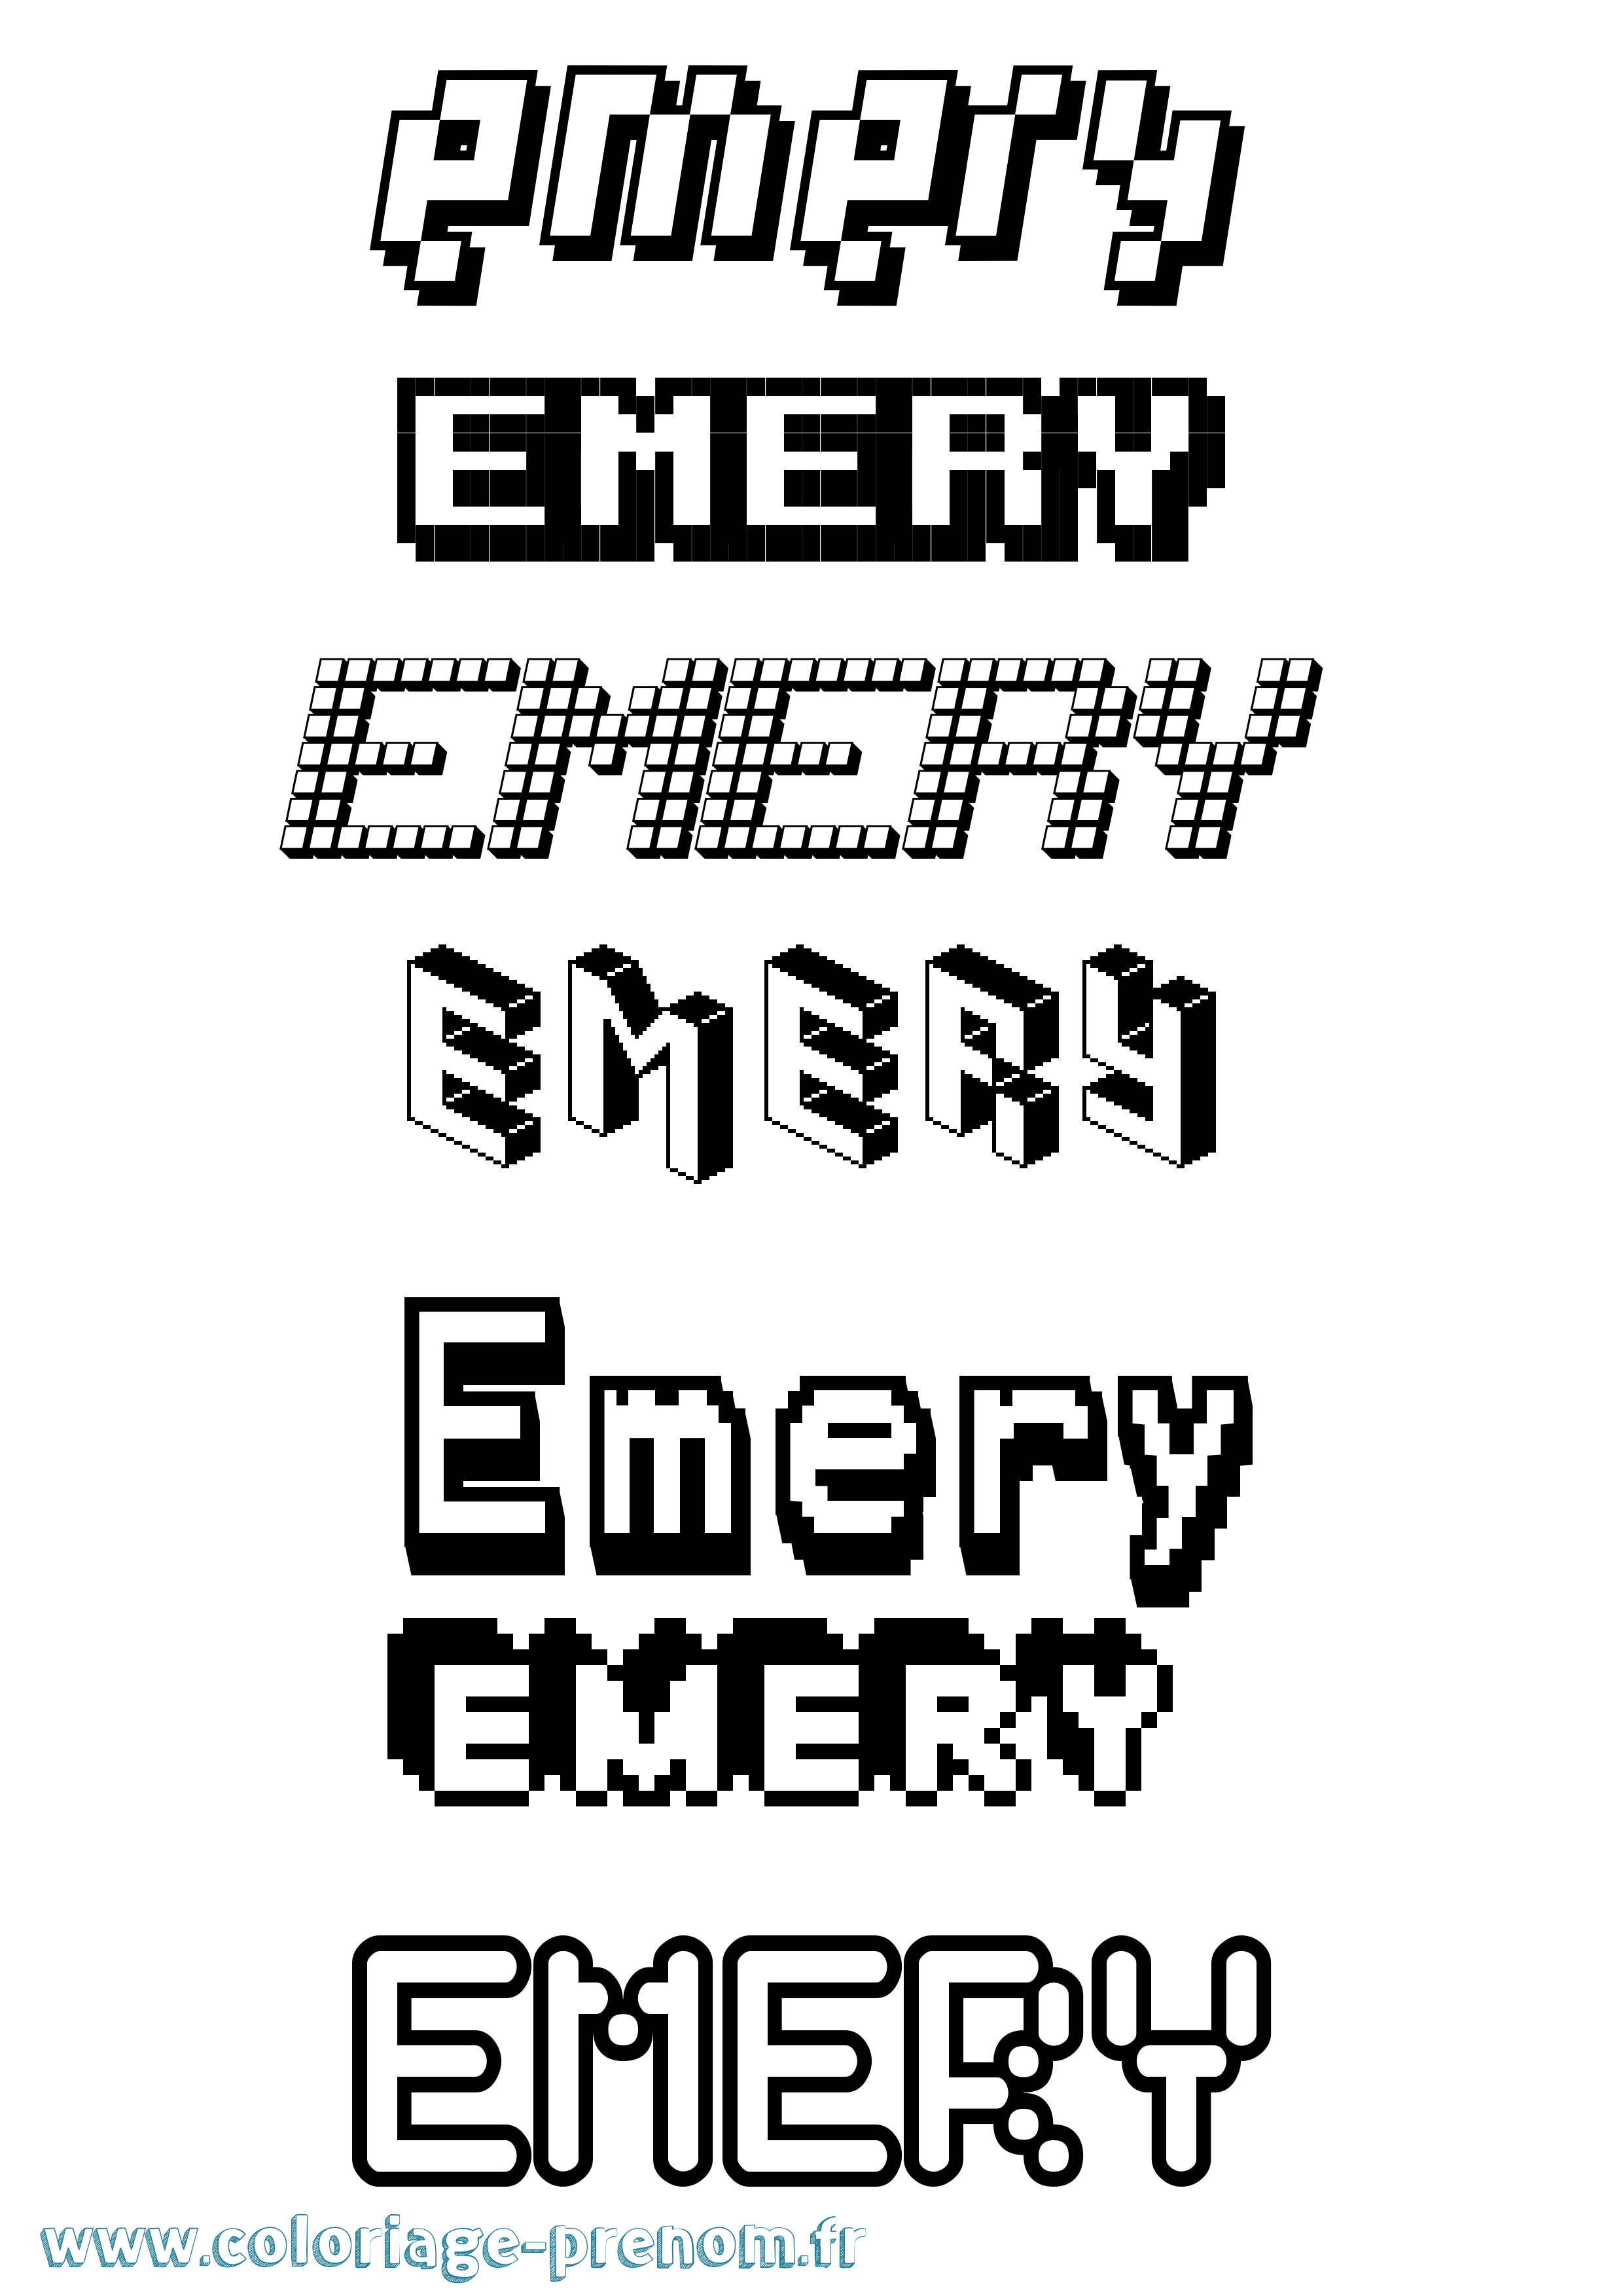 Coloriage prénom Emery Pixel